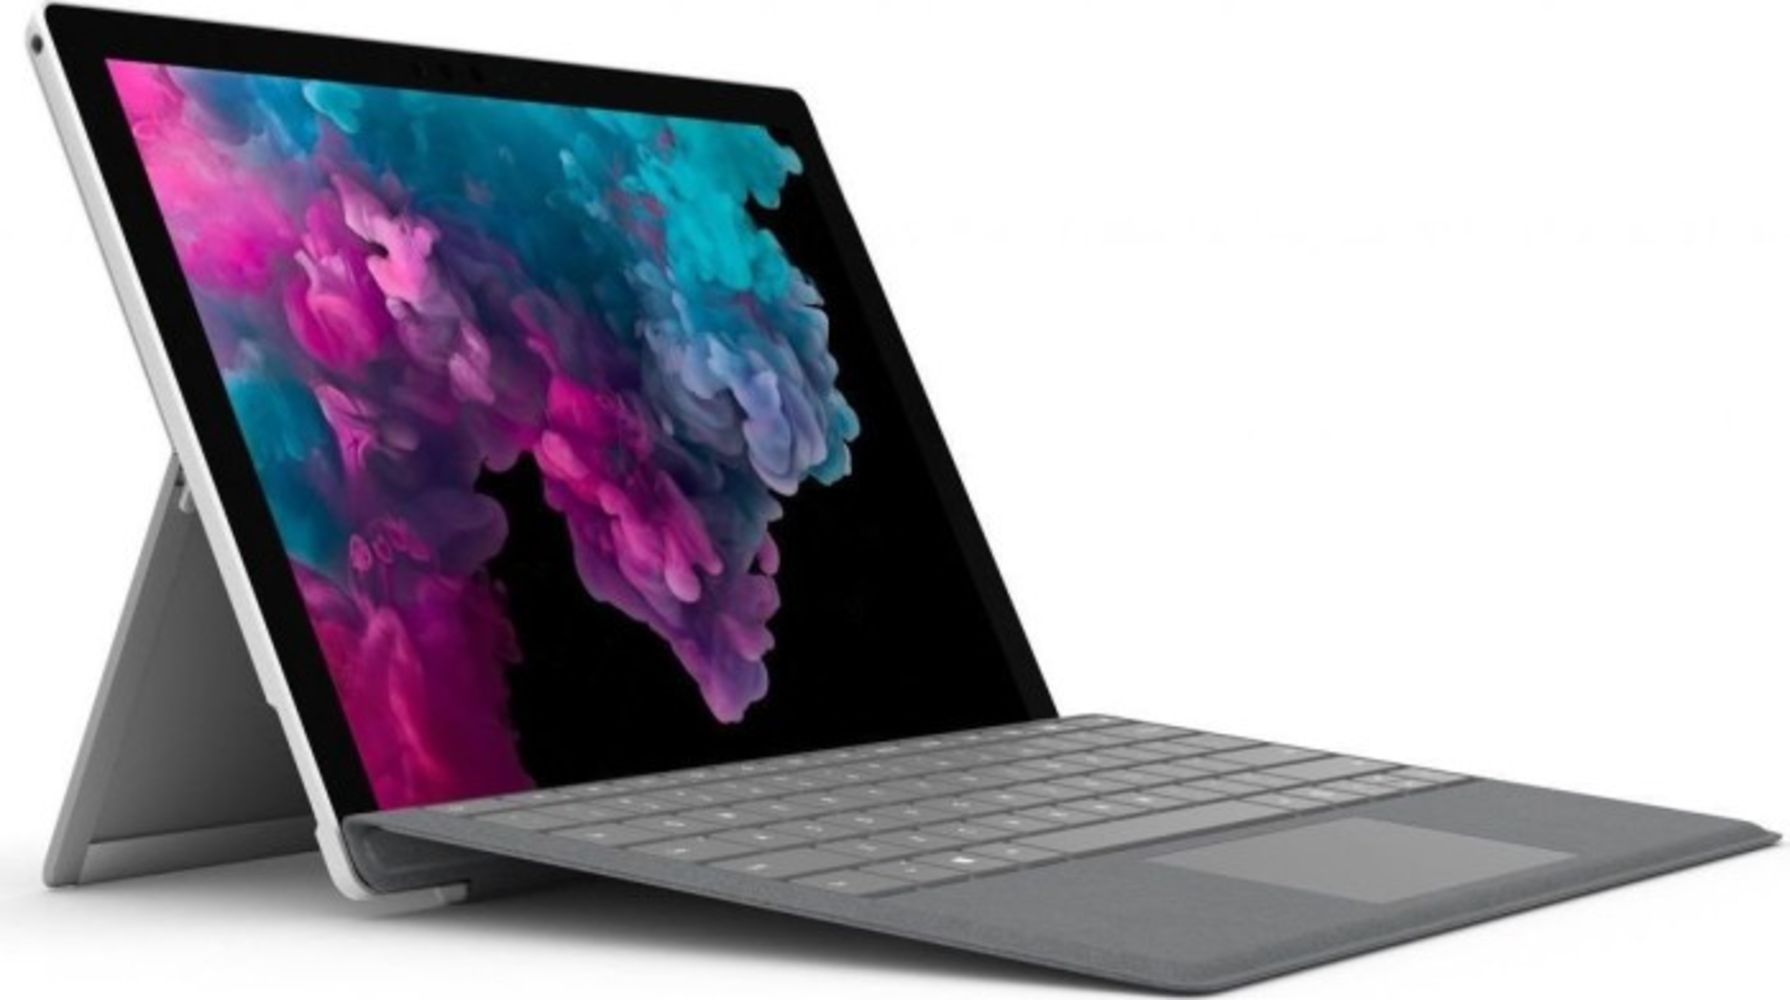 One Time Liquidation Sale Of Brand New Microsoft Surface Pro 6 Laptops - Low Start - No Deposit To Bid